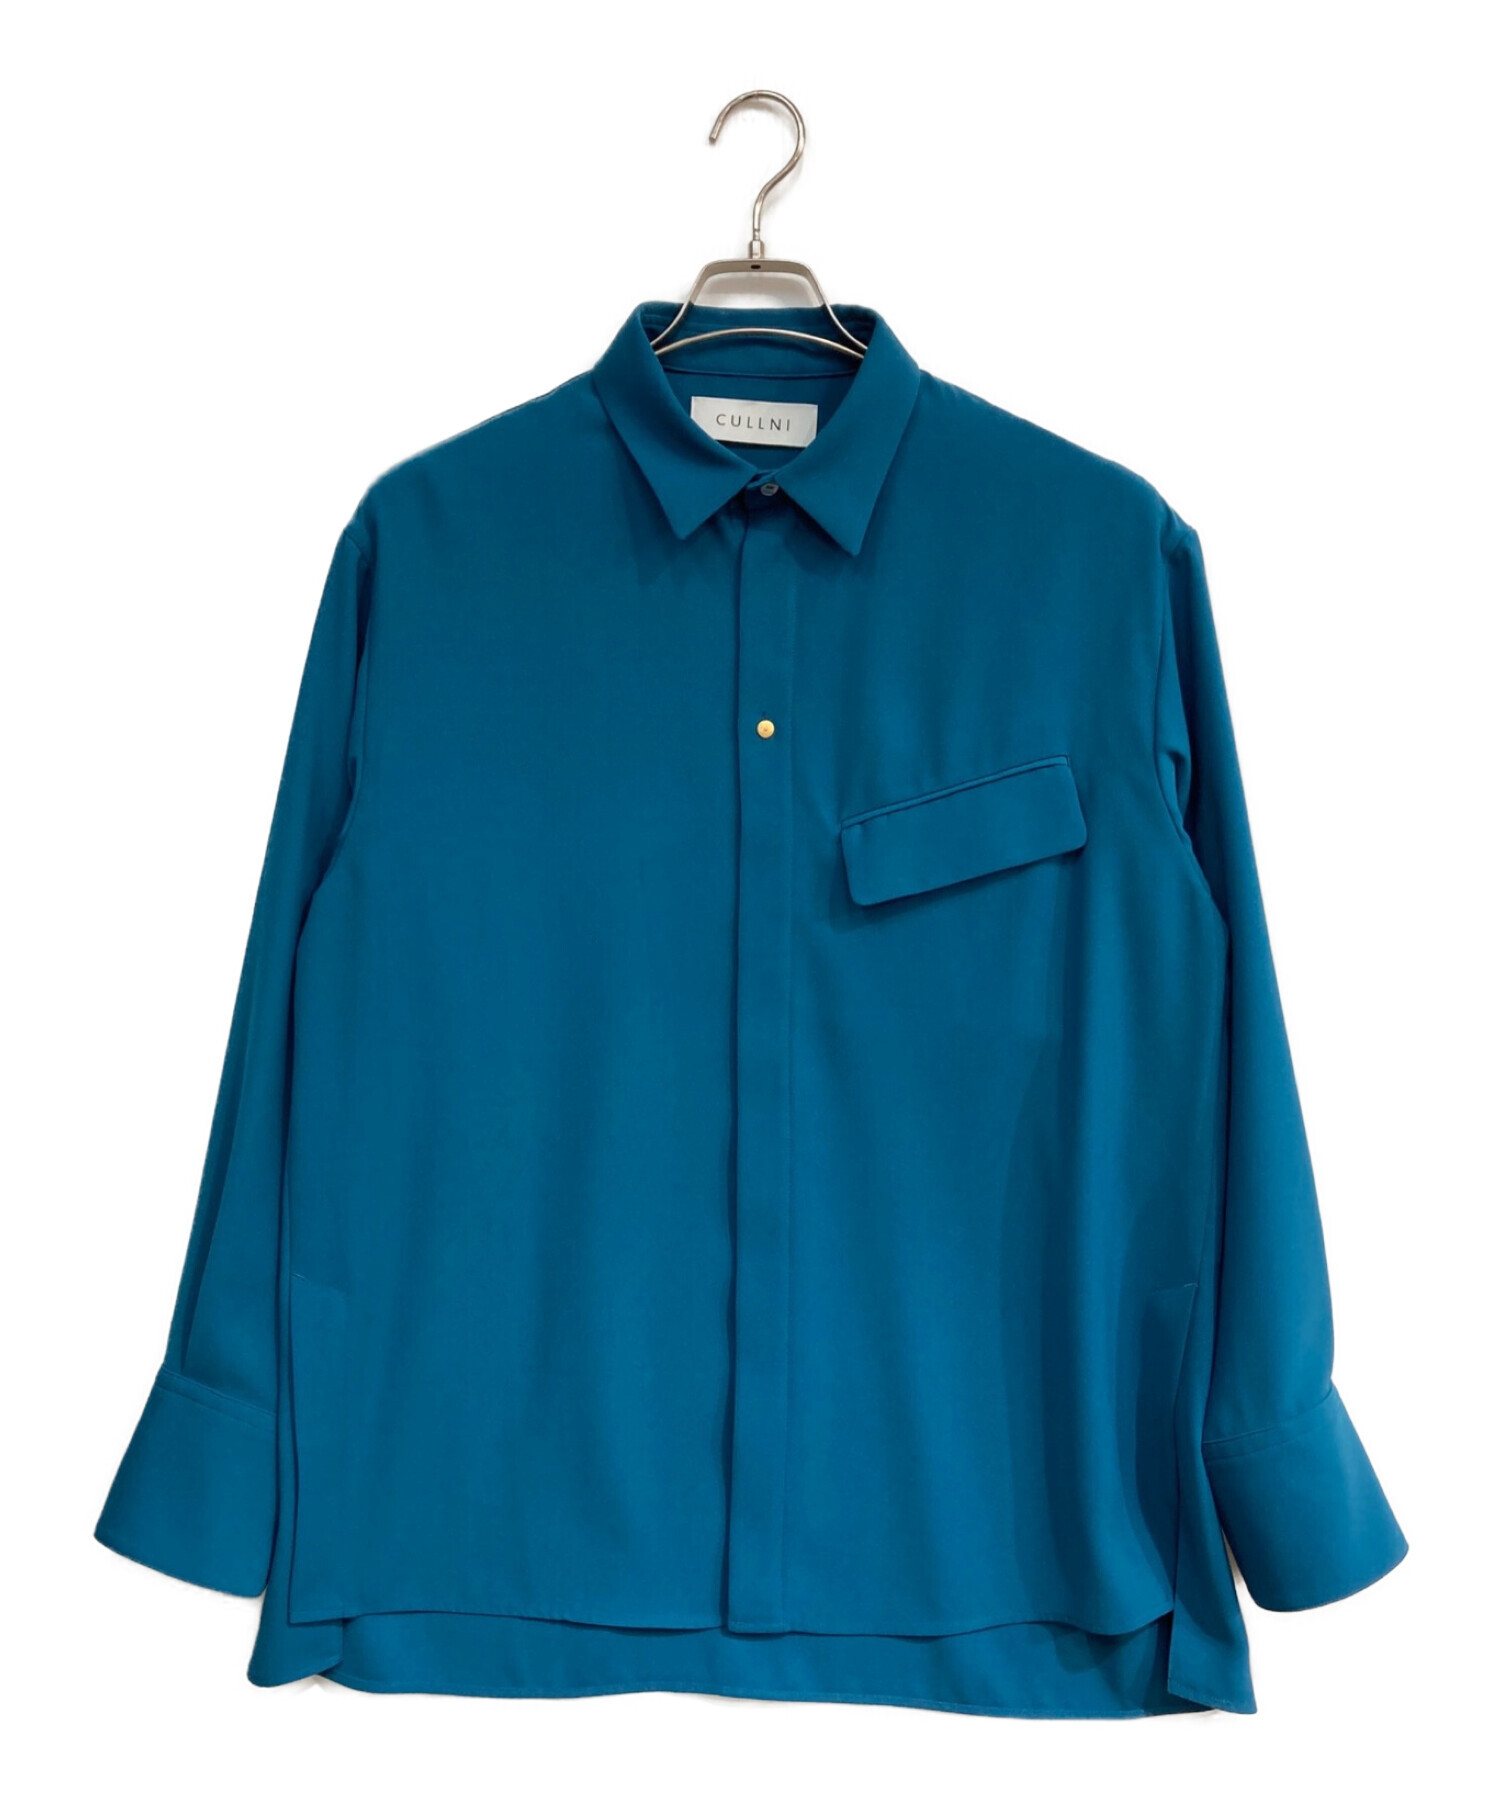 CULLNI (クルニ) リボンタイシャツ　22-SS-020 グリーン サイズ:2